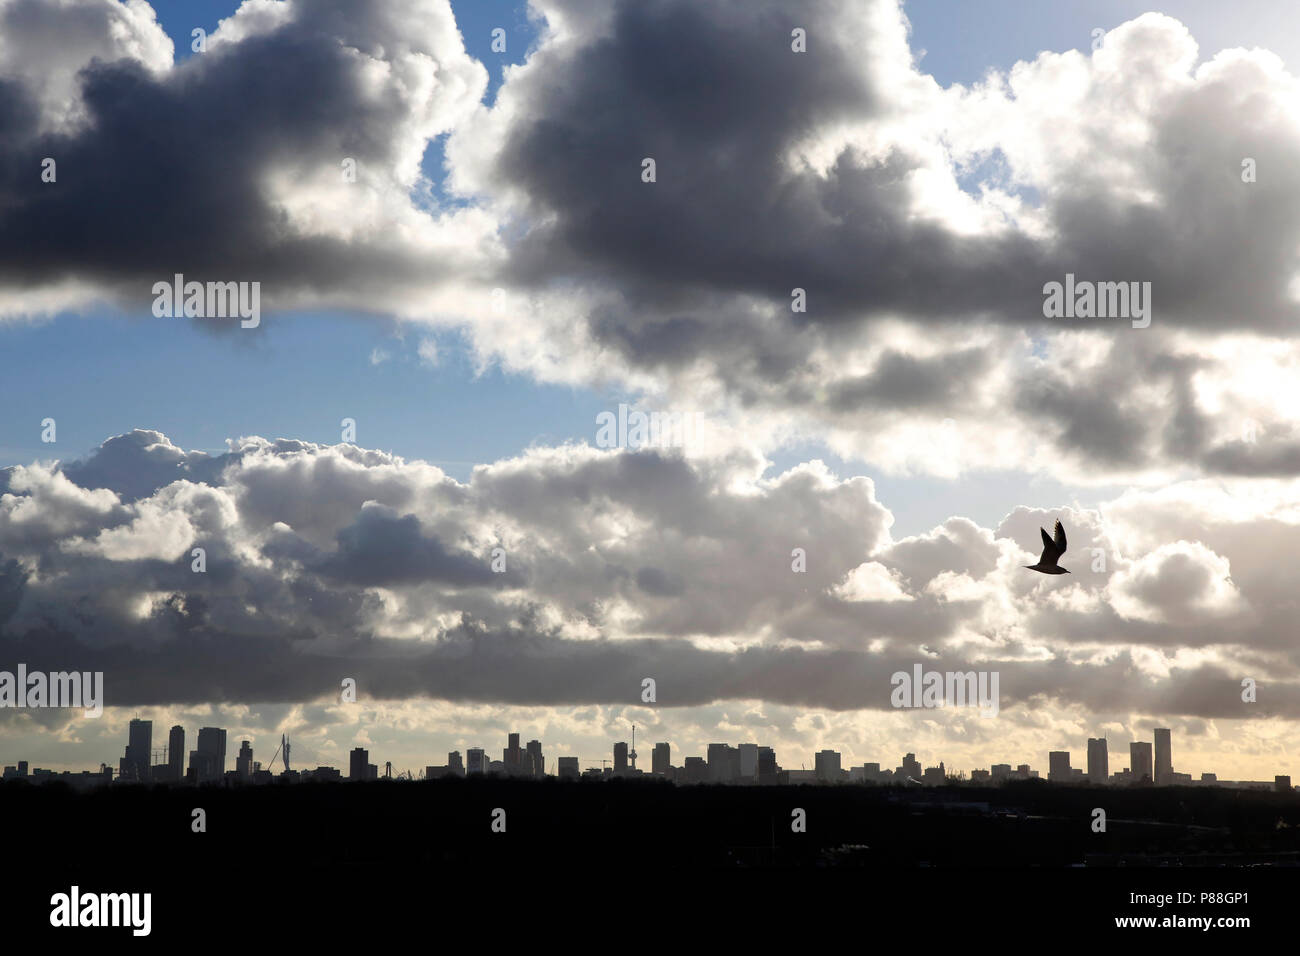 Stormmeeuw voor de skyline van Rotterdam; Common Gull and the skyline of Rotterdam Stock Photo